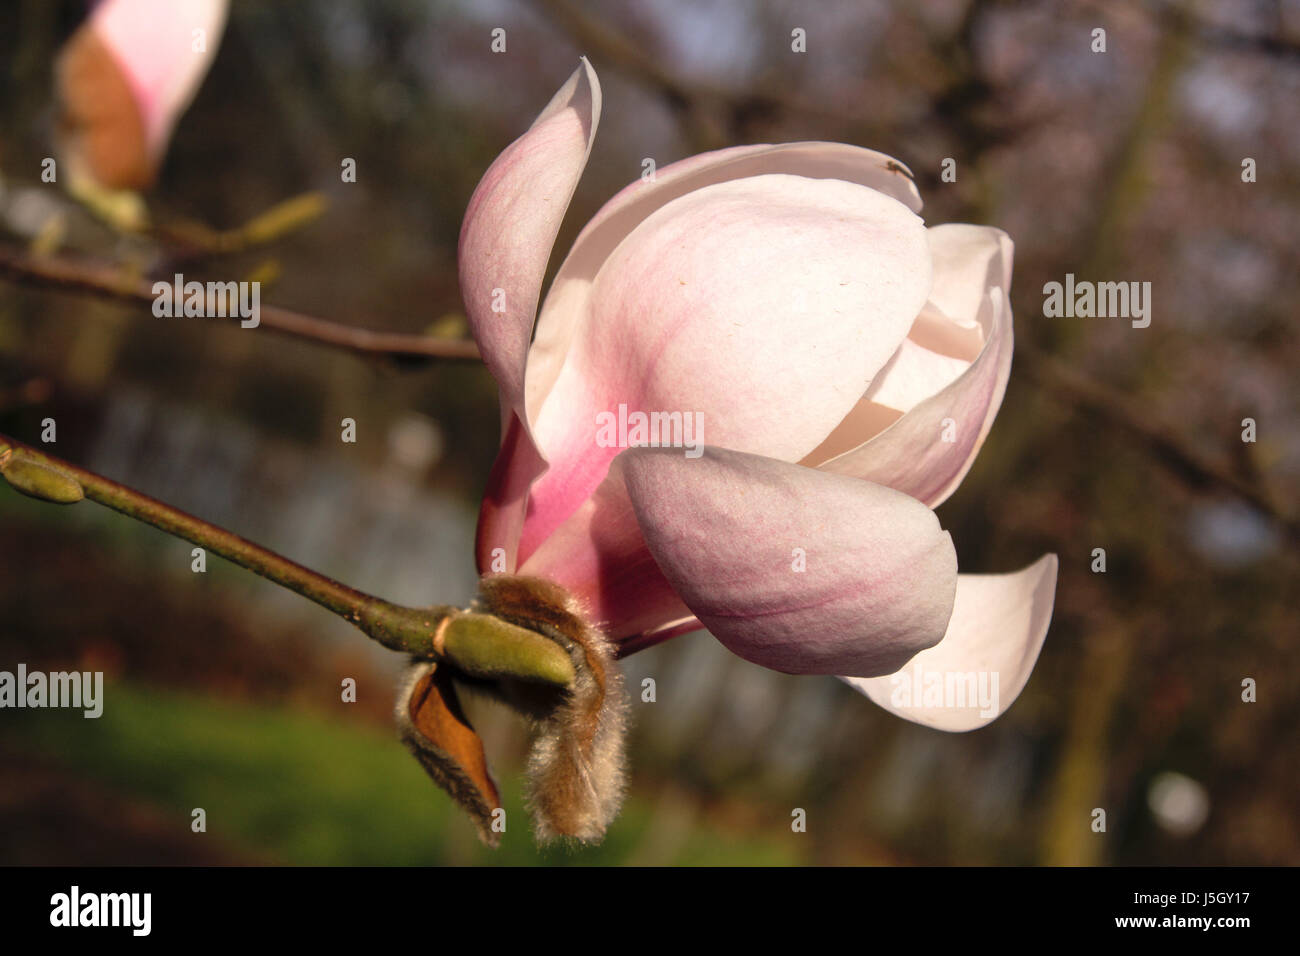 tree green bloom blossom flourish flourishing blank european caucasian spring Stock Photo